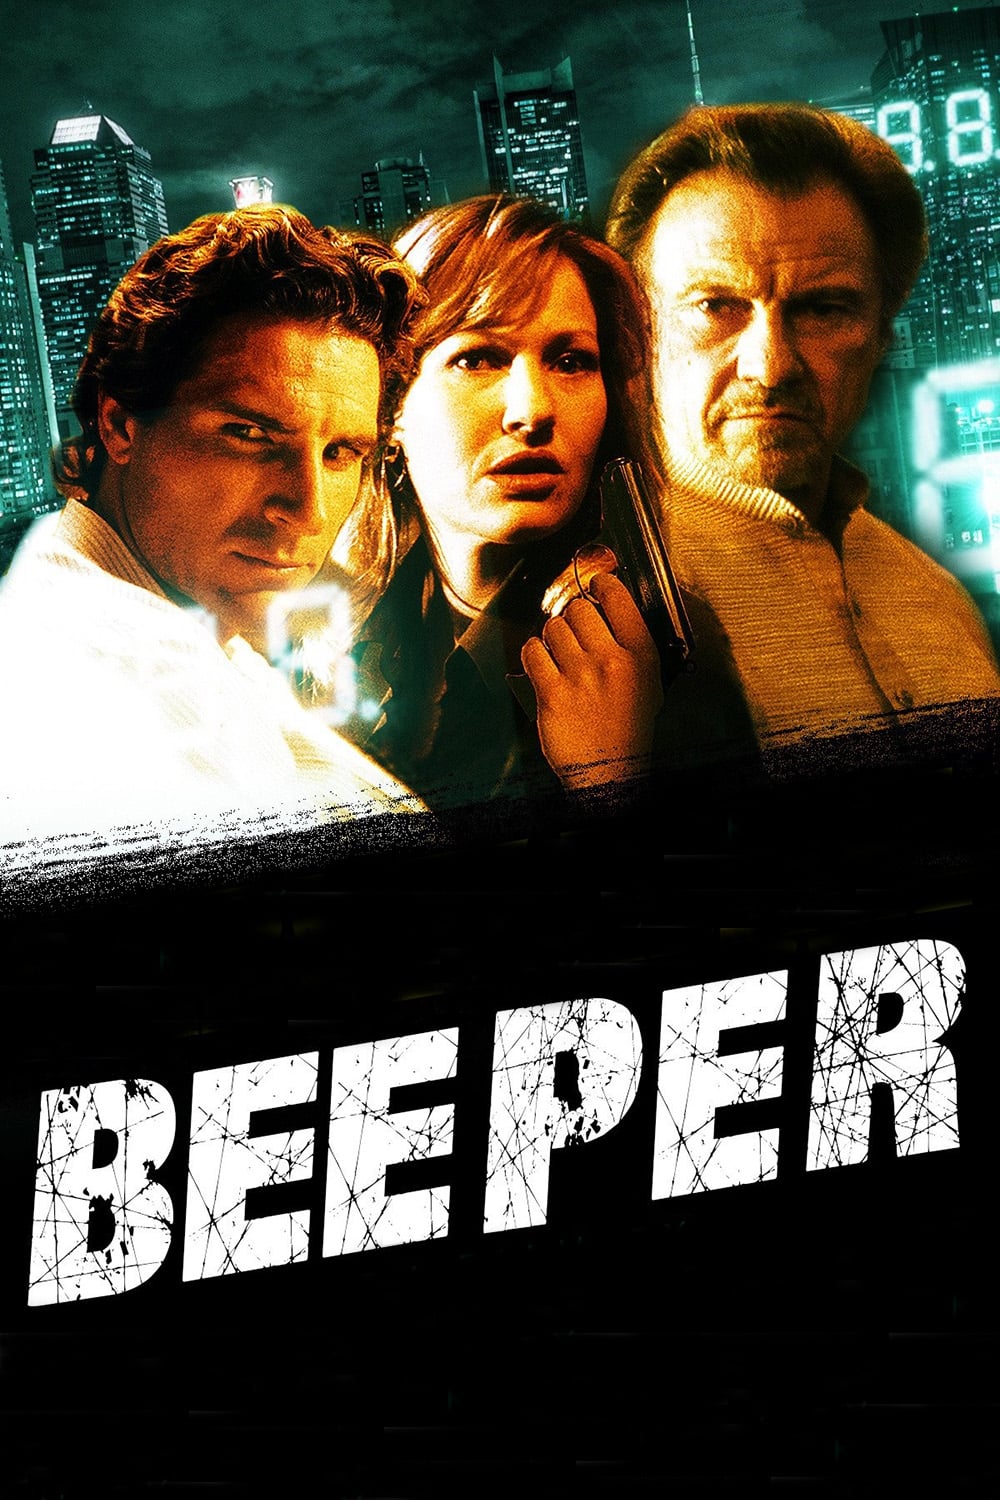 Beeper (2002)